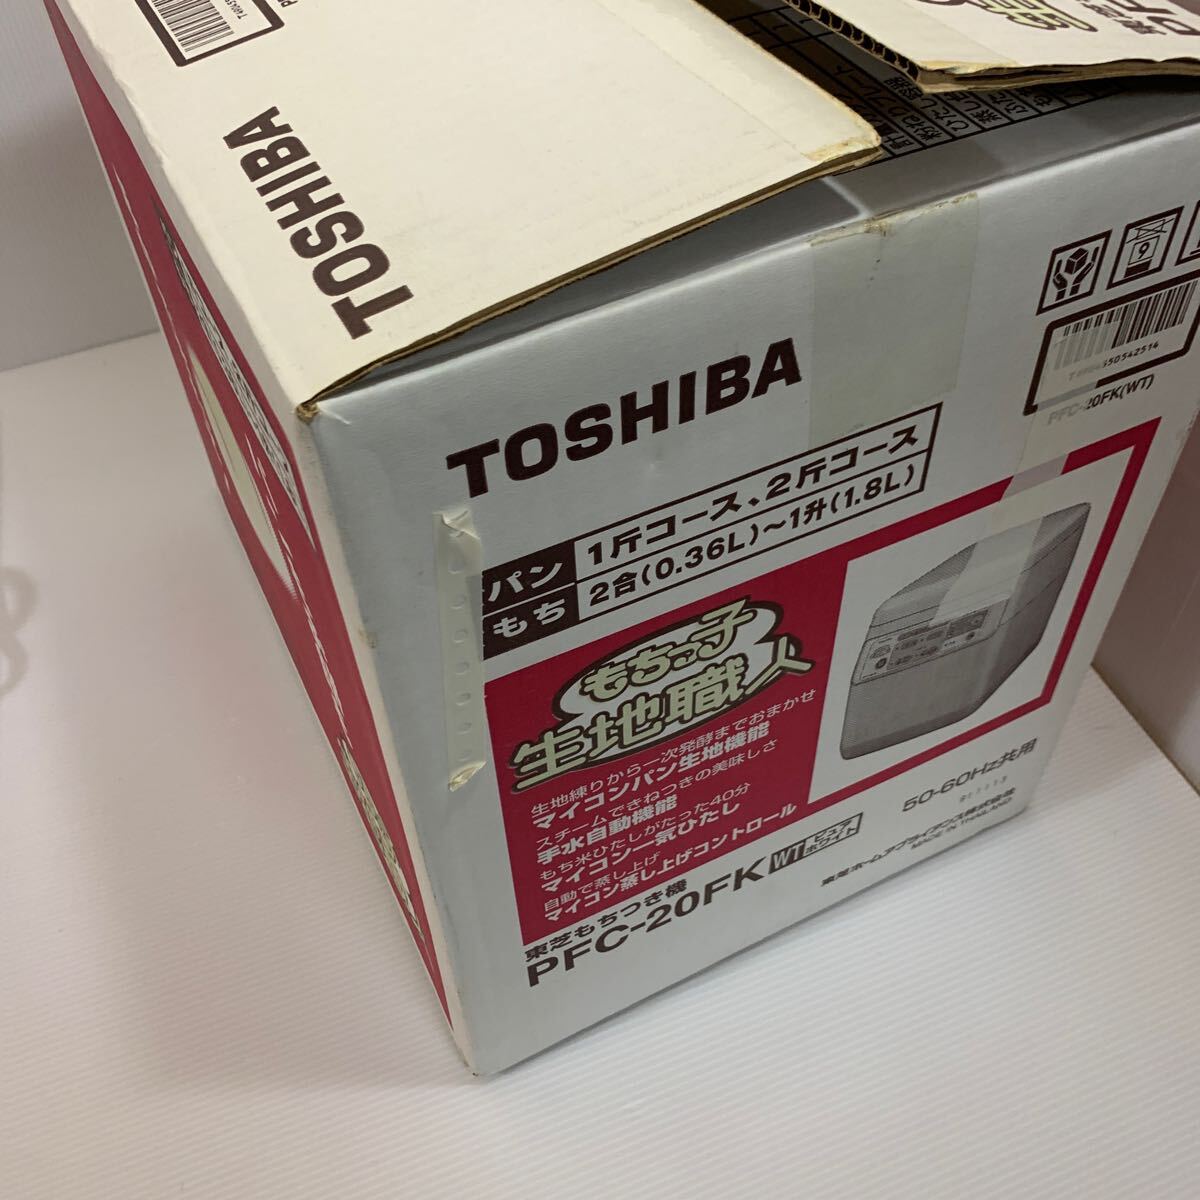  Toshiba TOSHIBA mochi attaching machine unused goods PFC-20FK white (04.25)